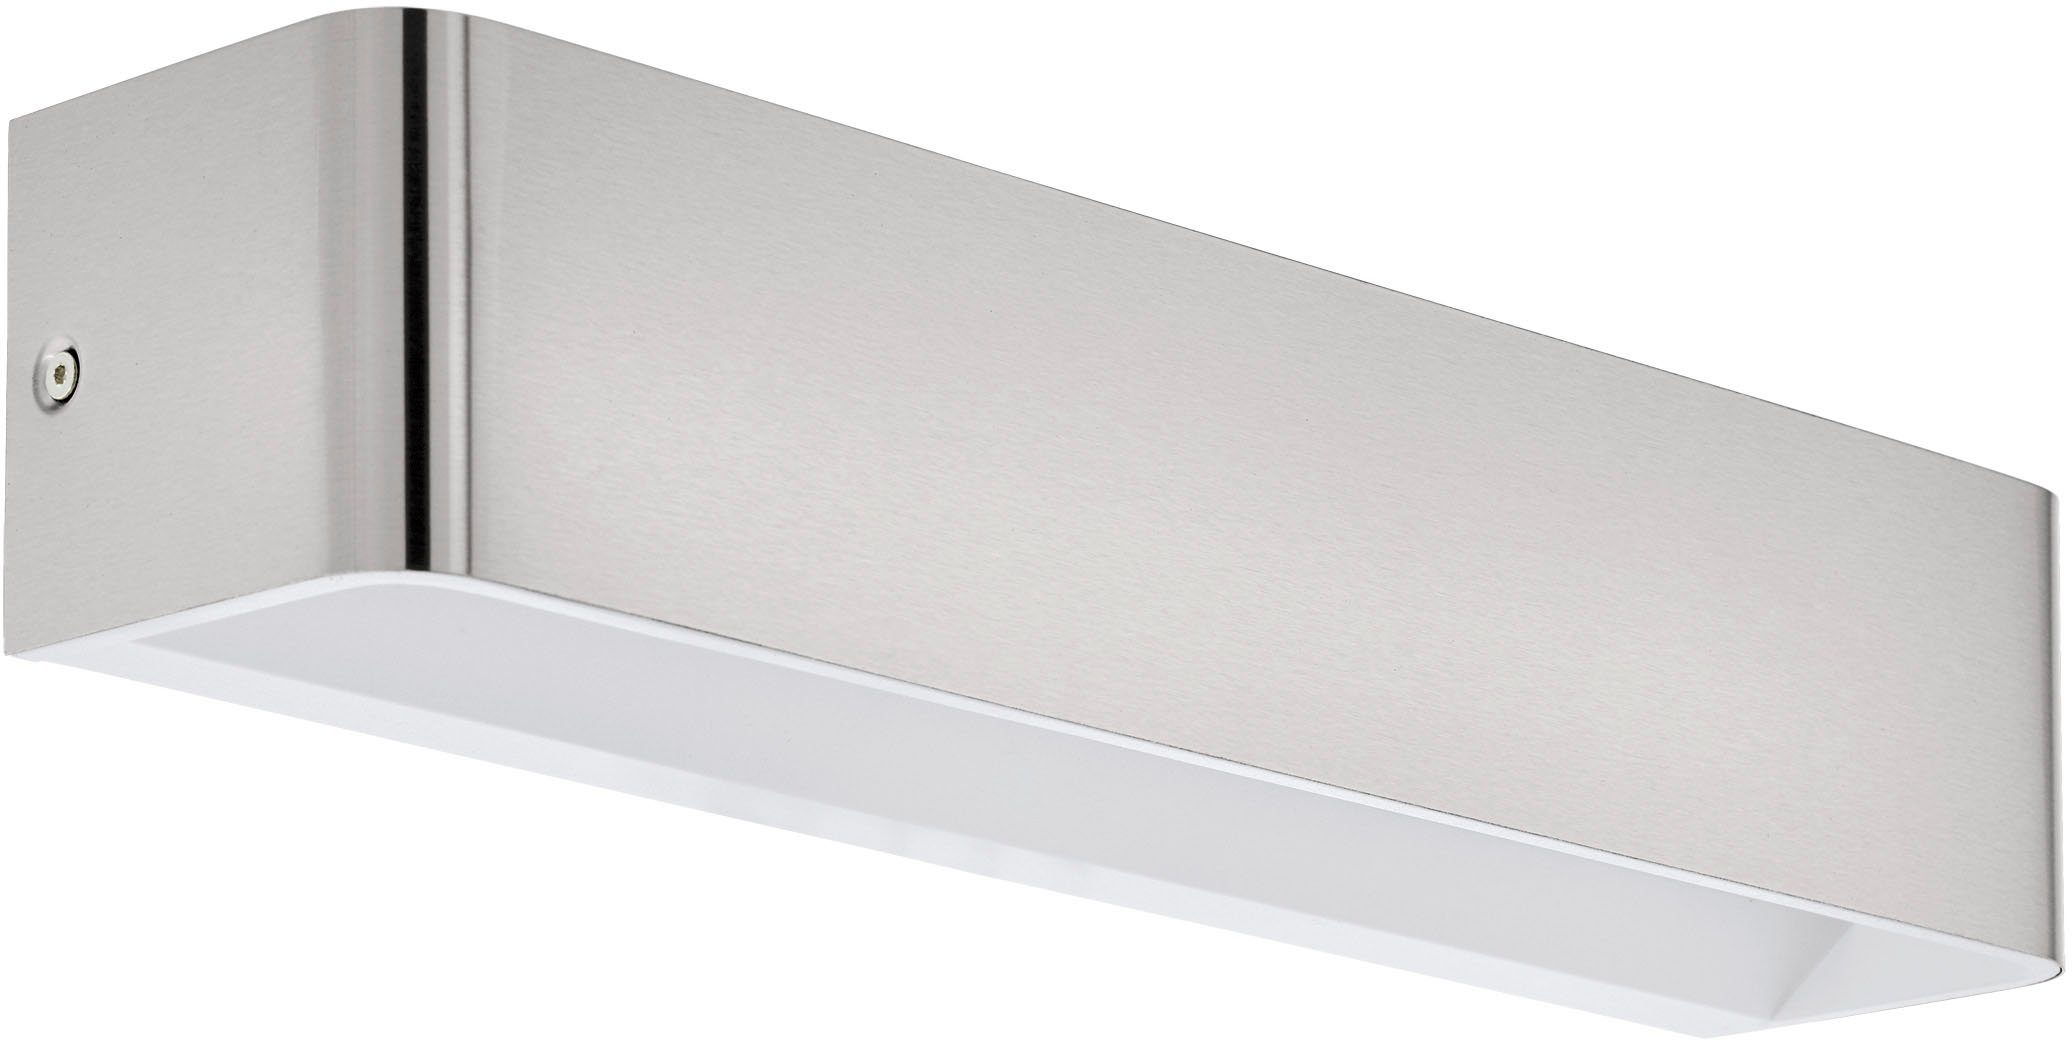 EGLO Wandleuchte SANIA 4, LED Platine integriert, LED fest fest Inklusive Warmweiß, verbaute